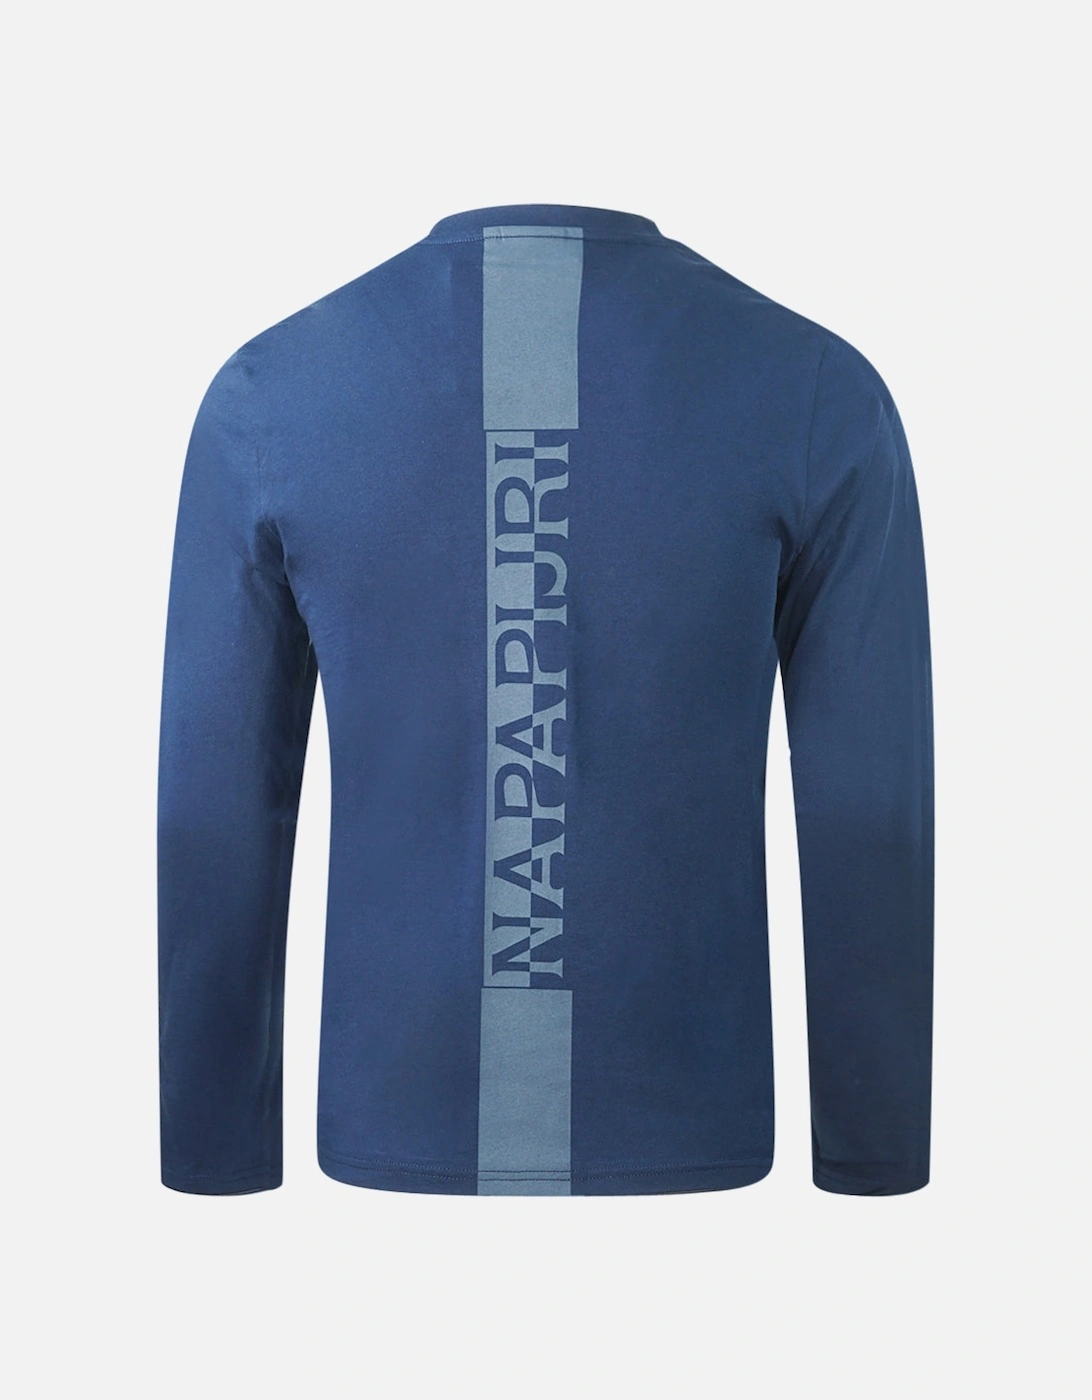 S-SURF LS Logo Medieval Blue Long Sleeve T-Shirt